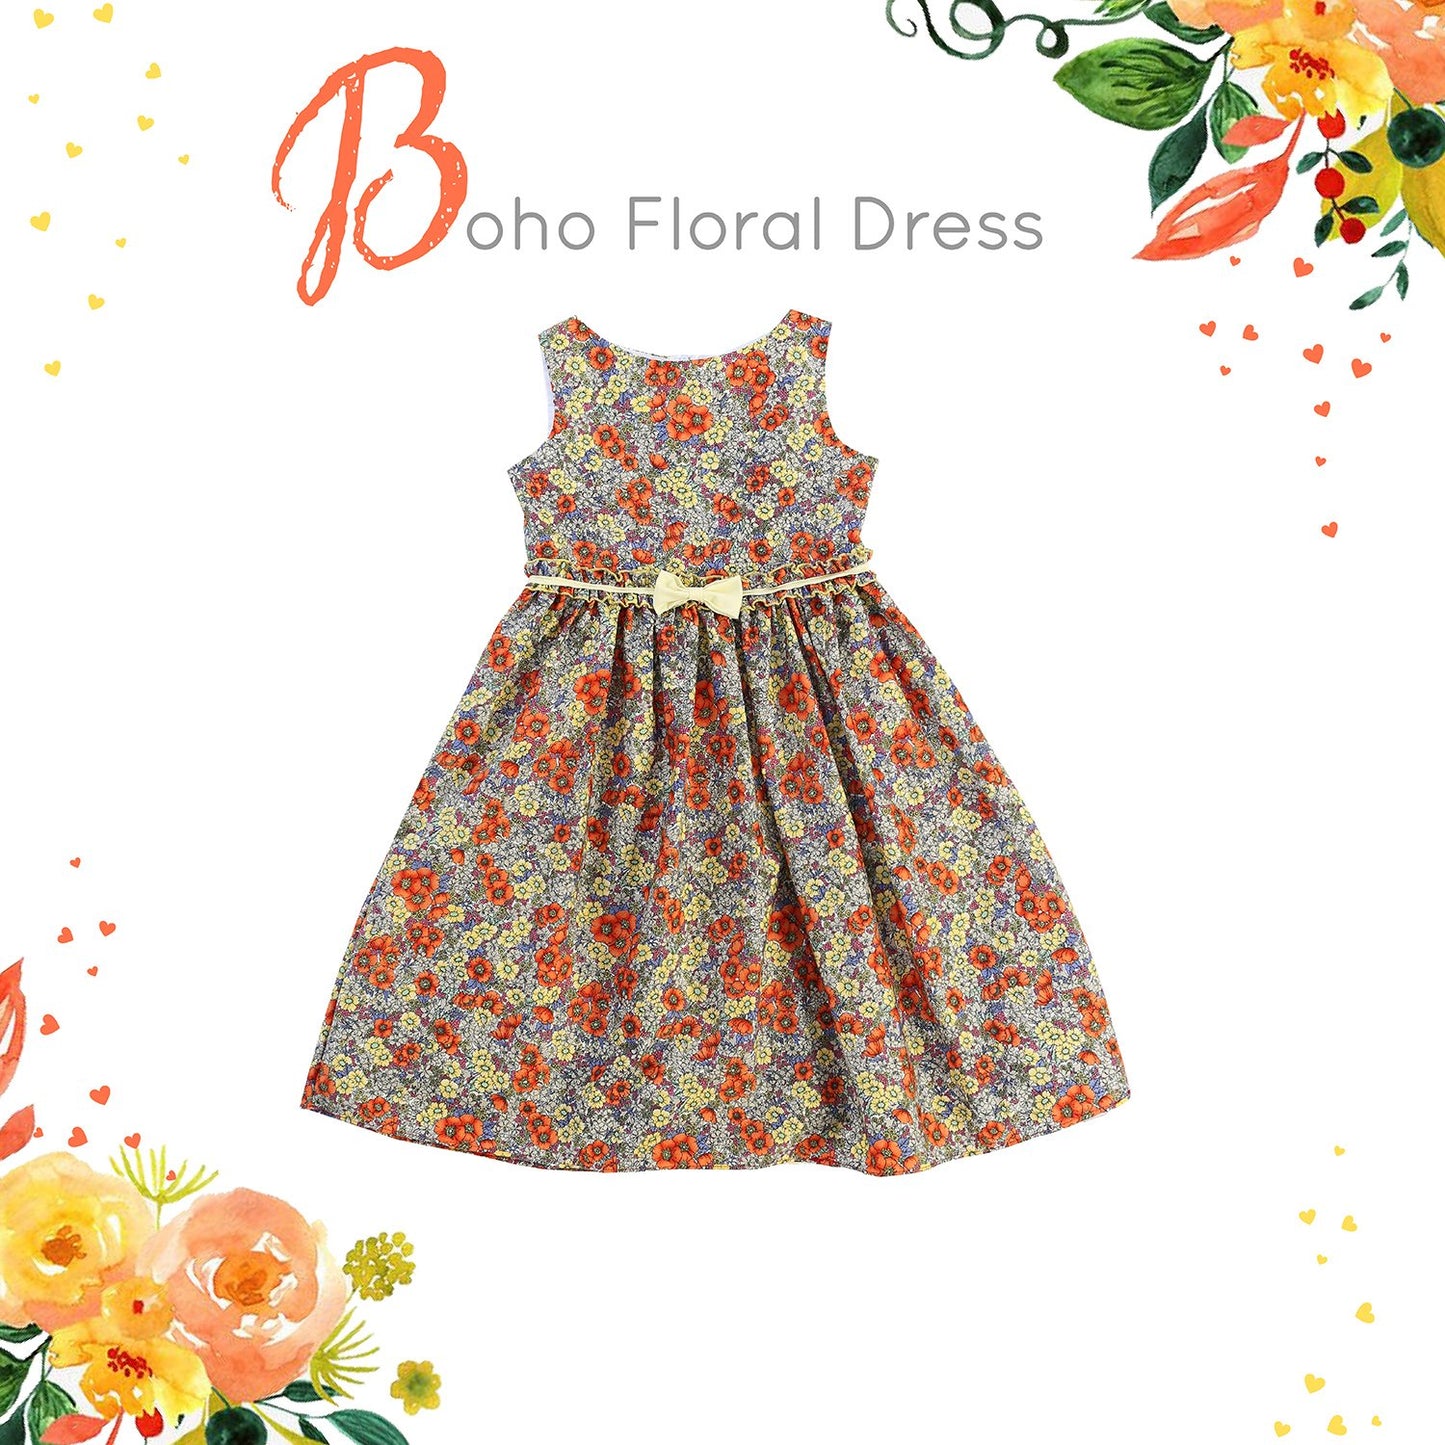 Dress - Boho Floral Print Cotton Dress With Bow